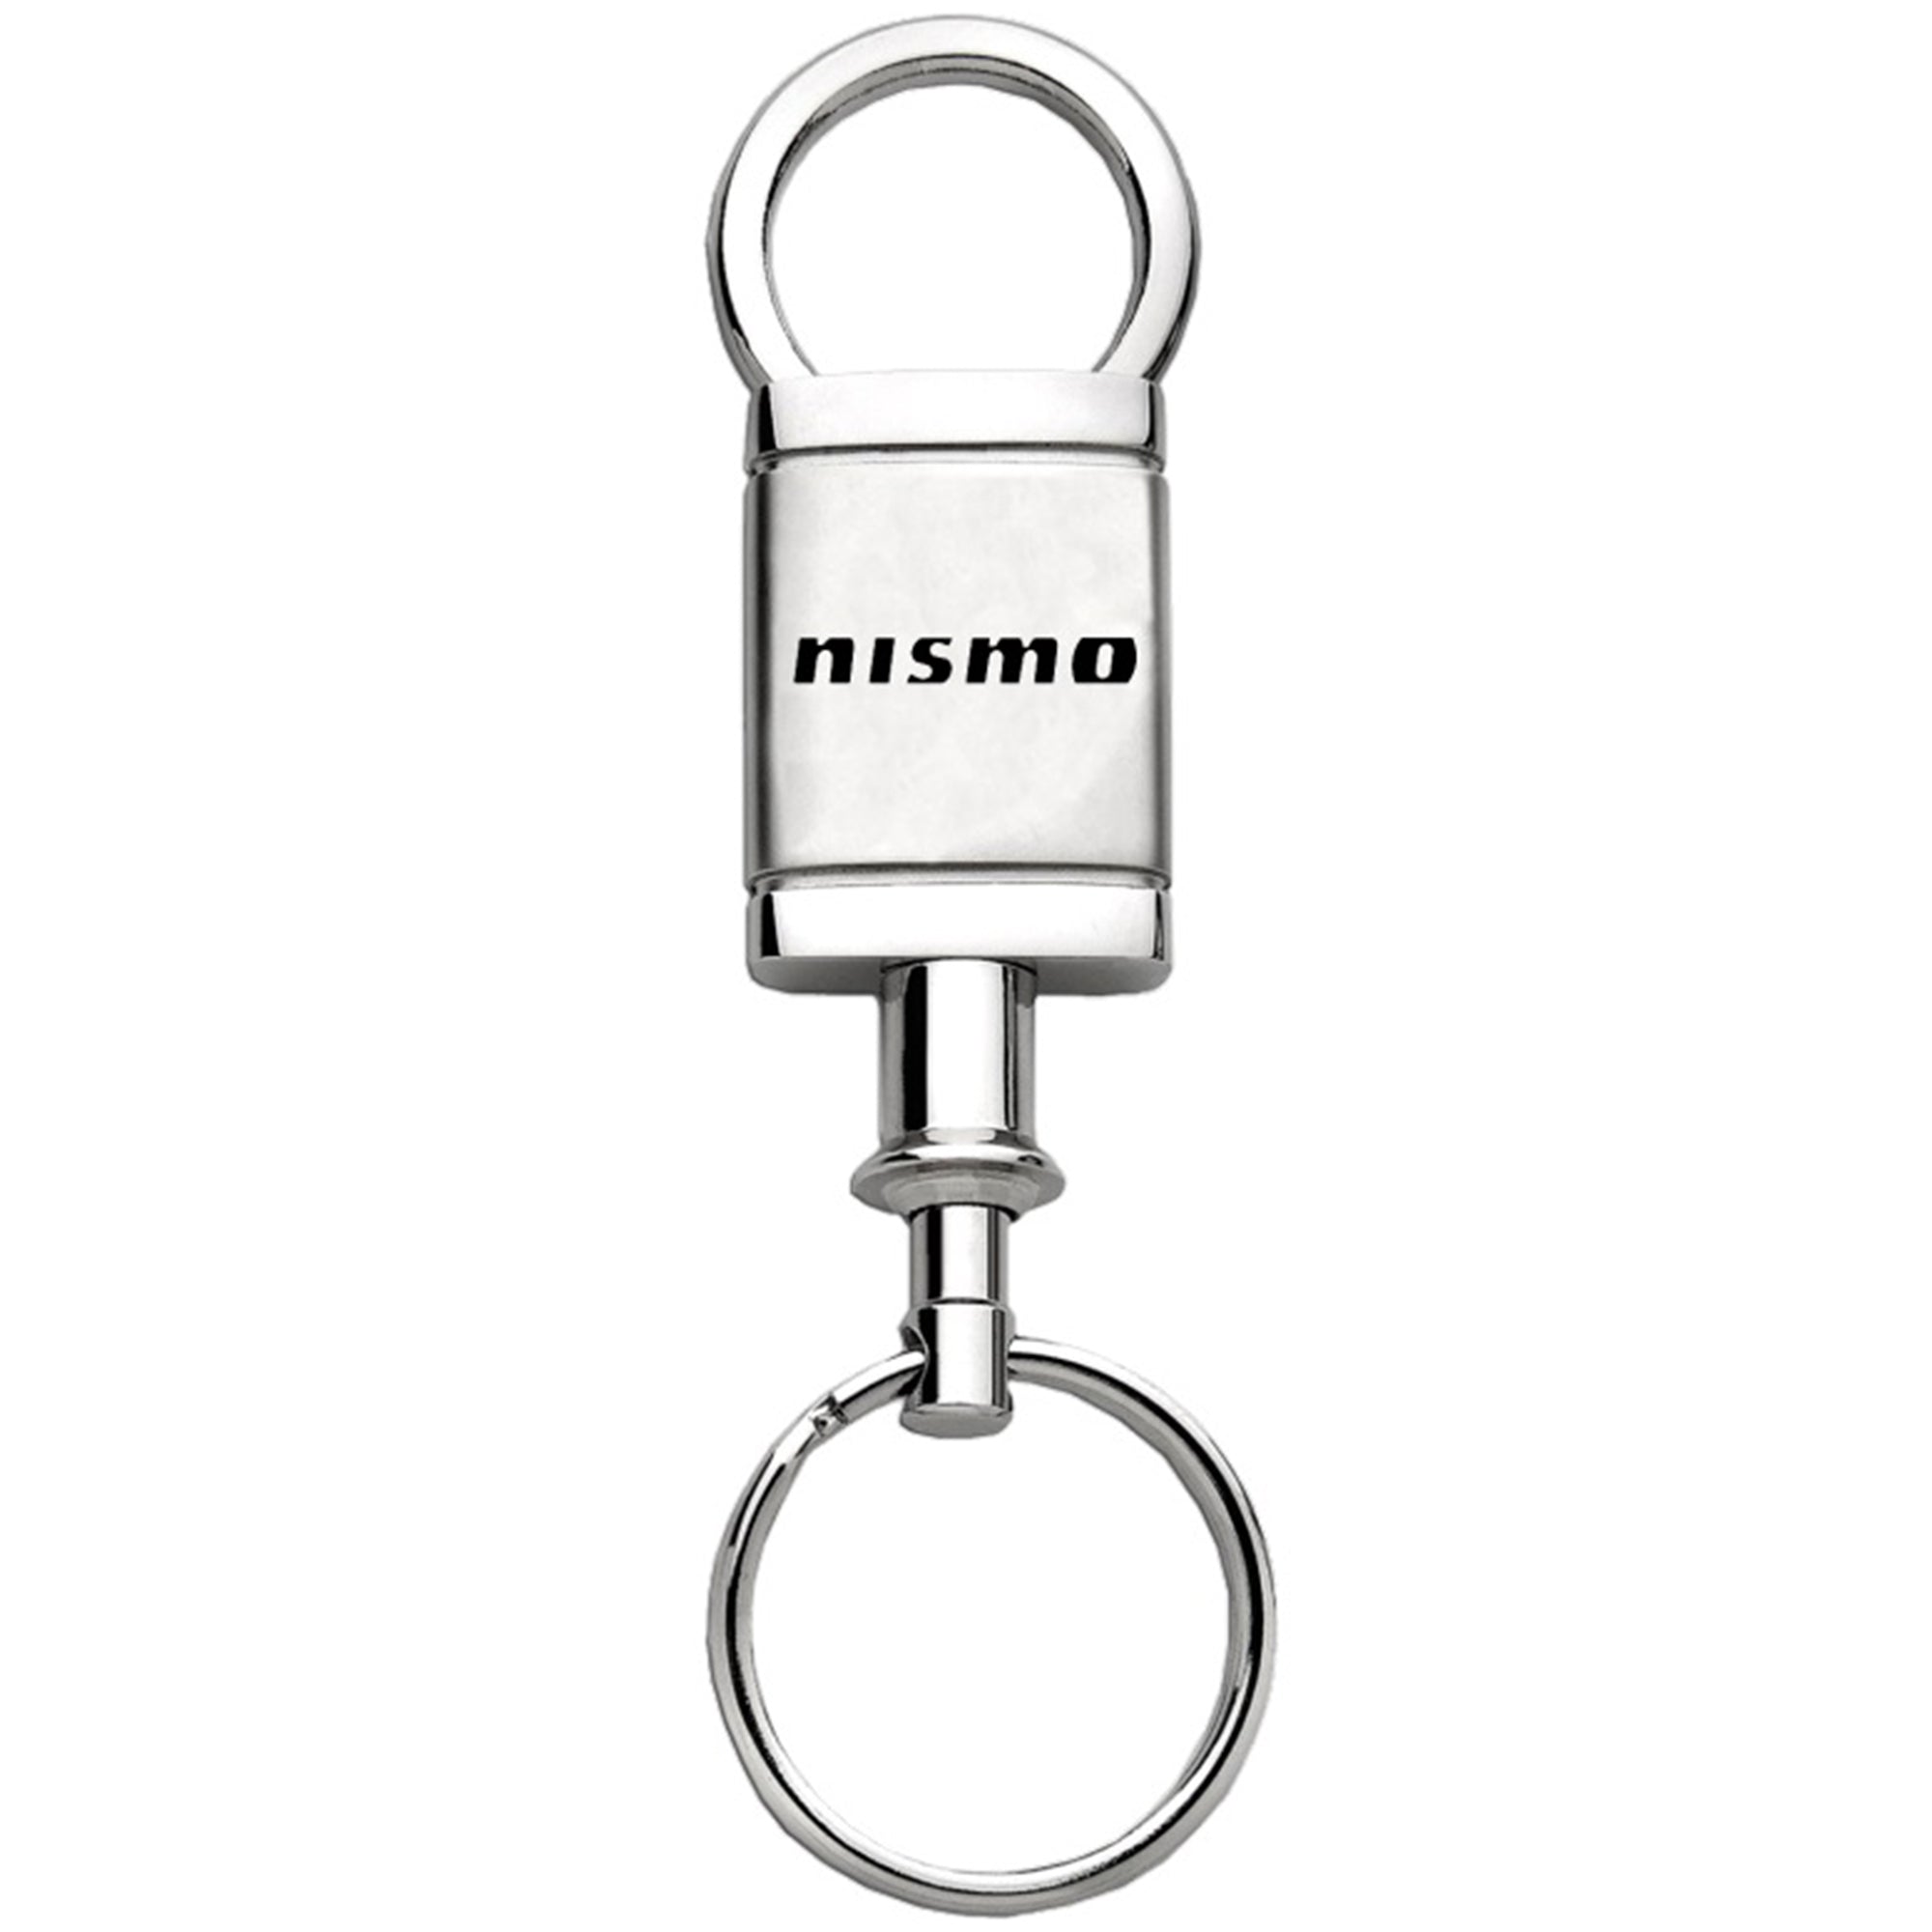 Nissan,Nismo,Key Chain